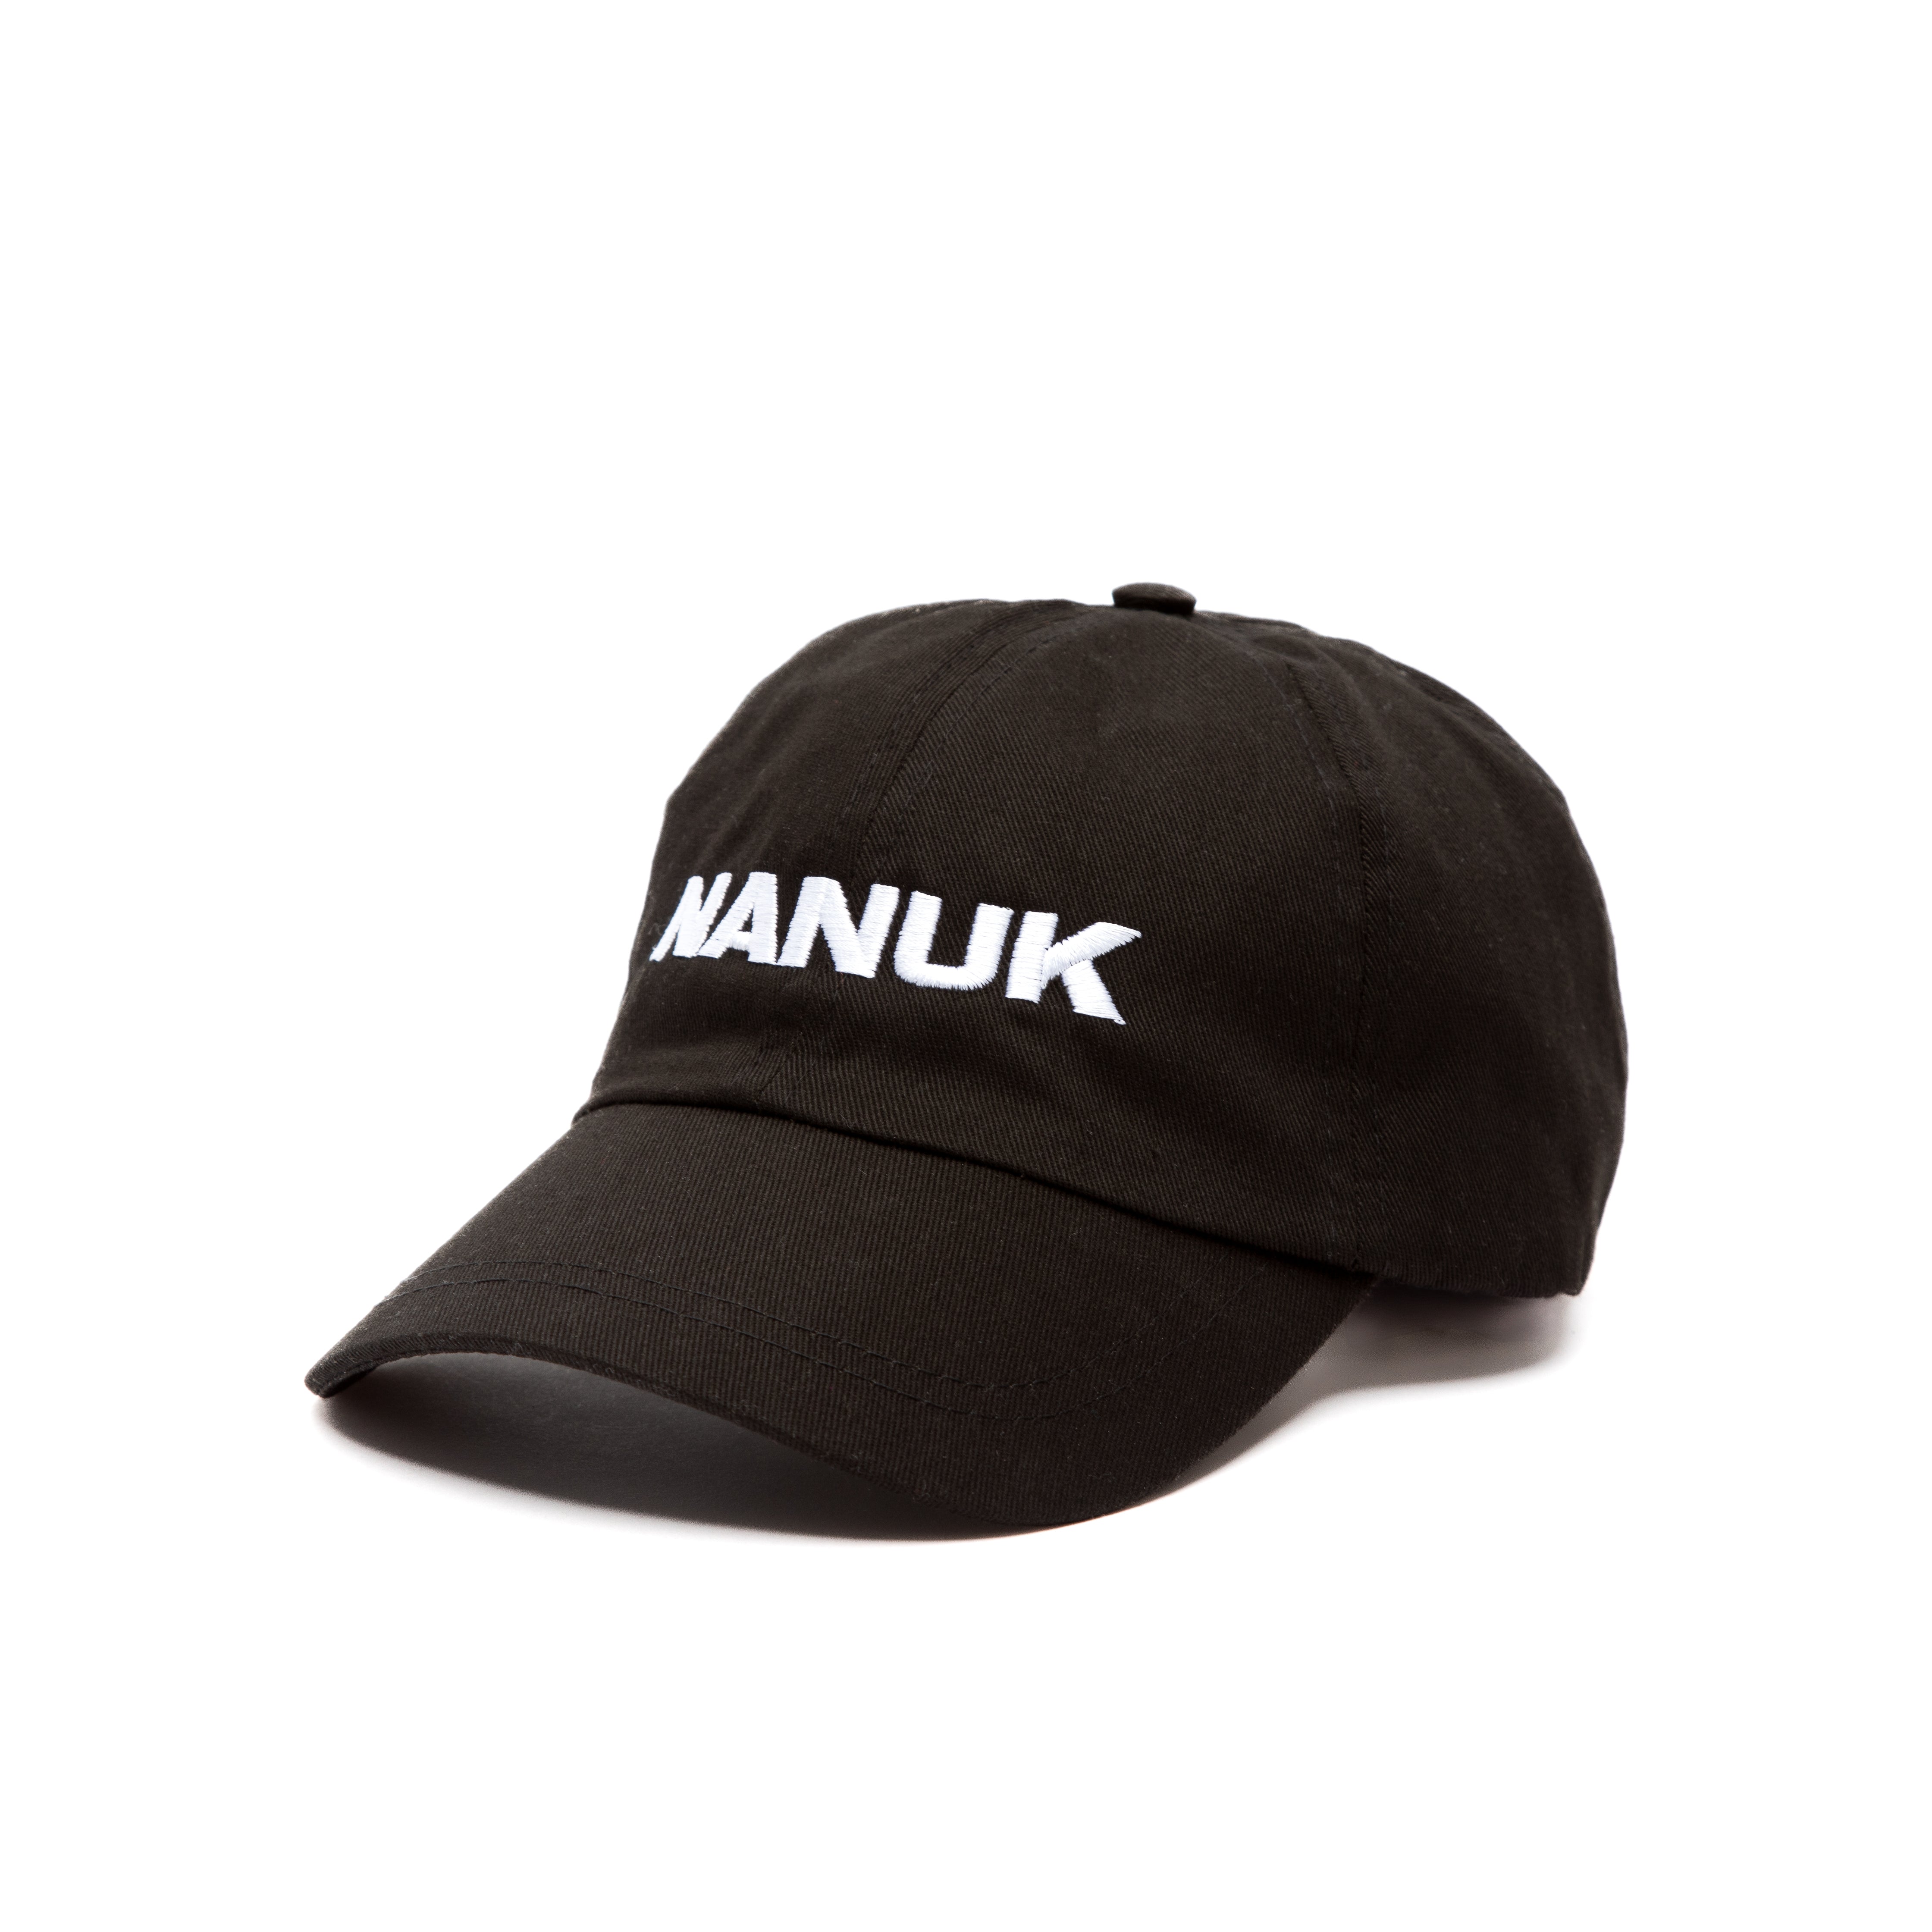 Nanuk Heritage Cap front